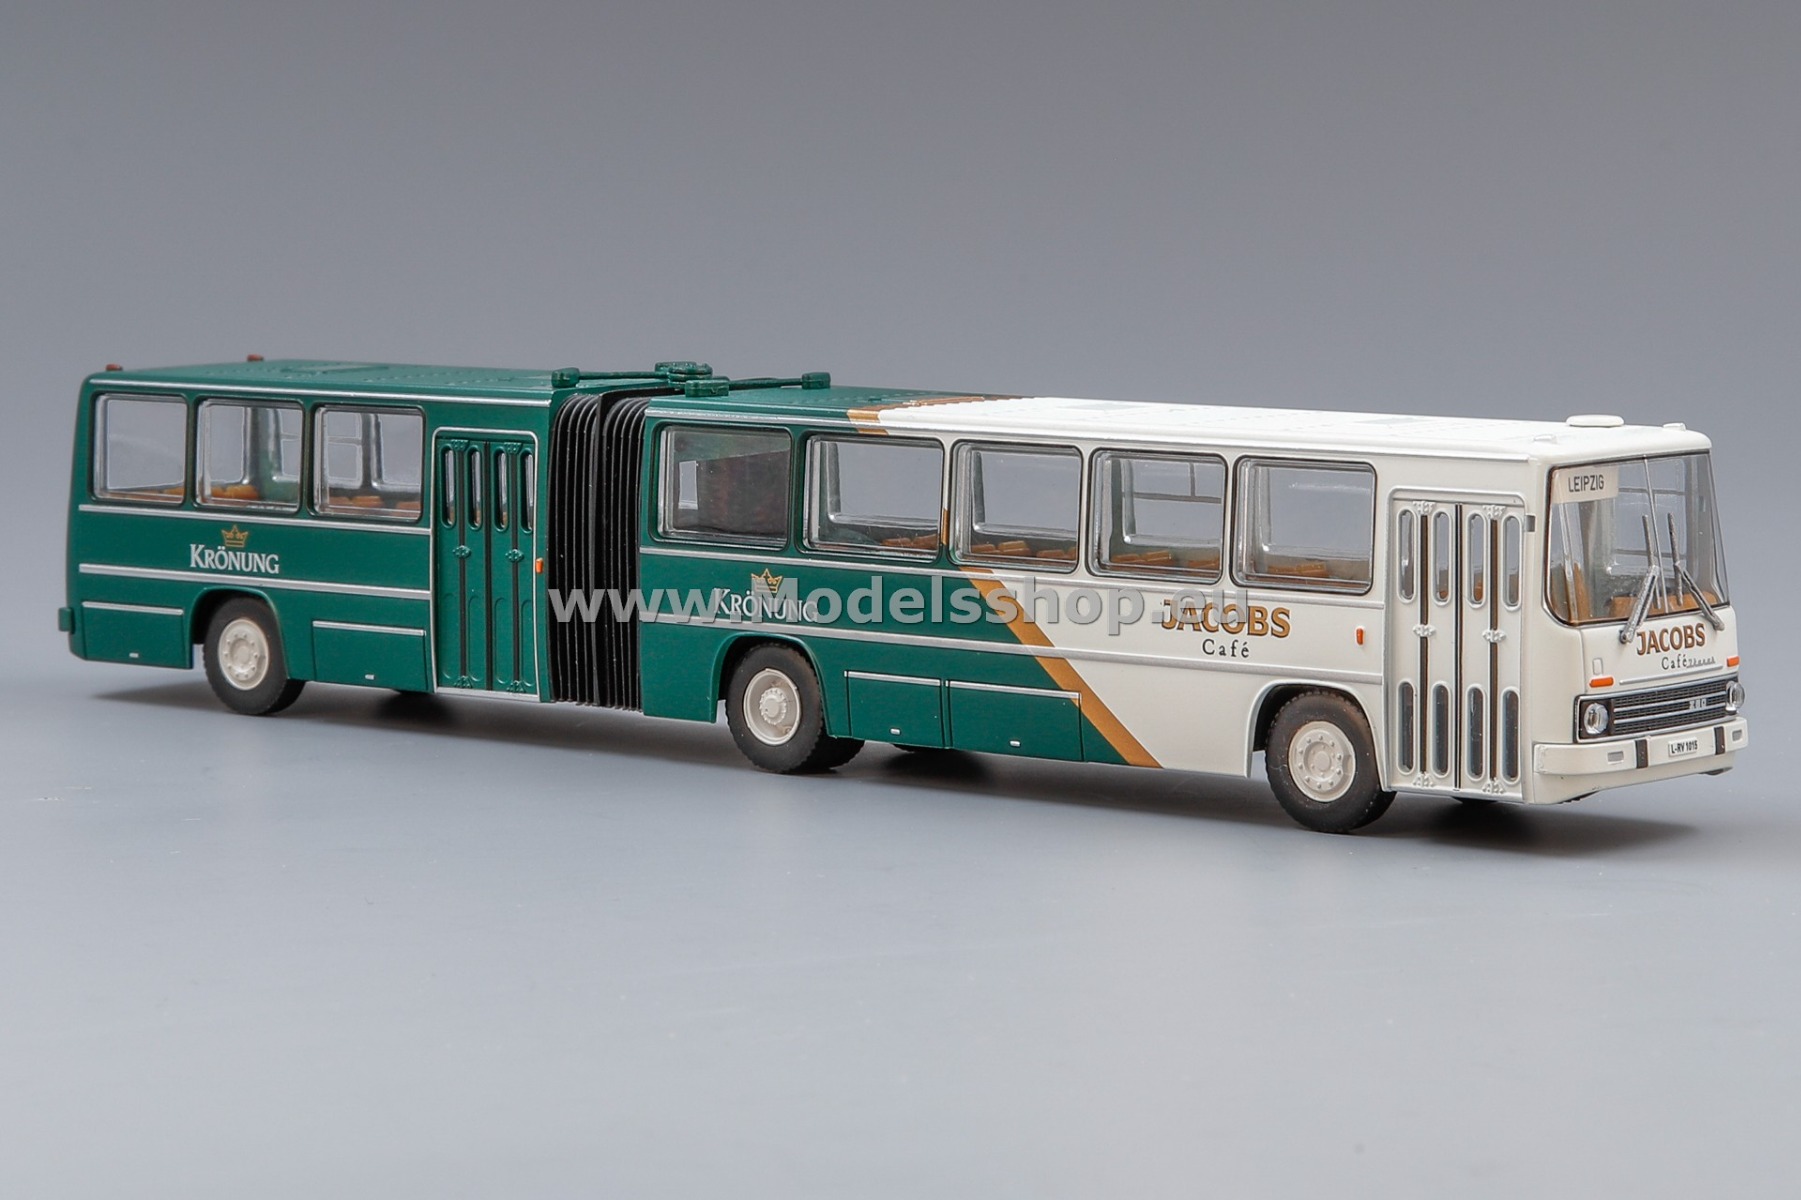 Ikarus 280.03 articulated bus, 1990 Leipzig - Jacobs Krönung /white - green/